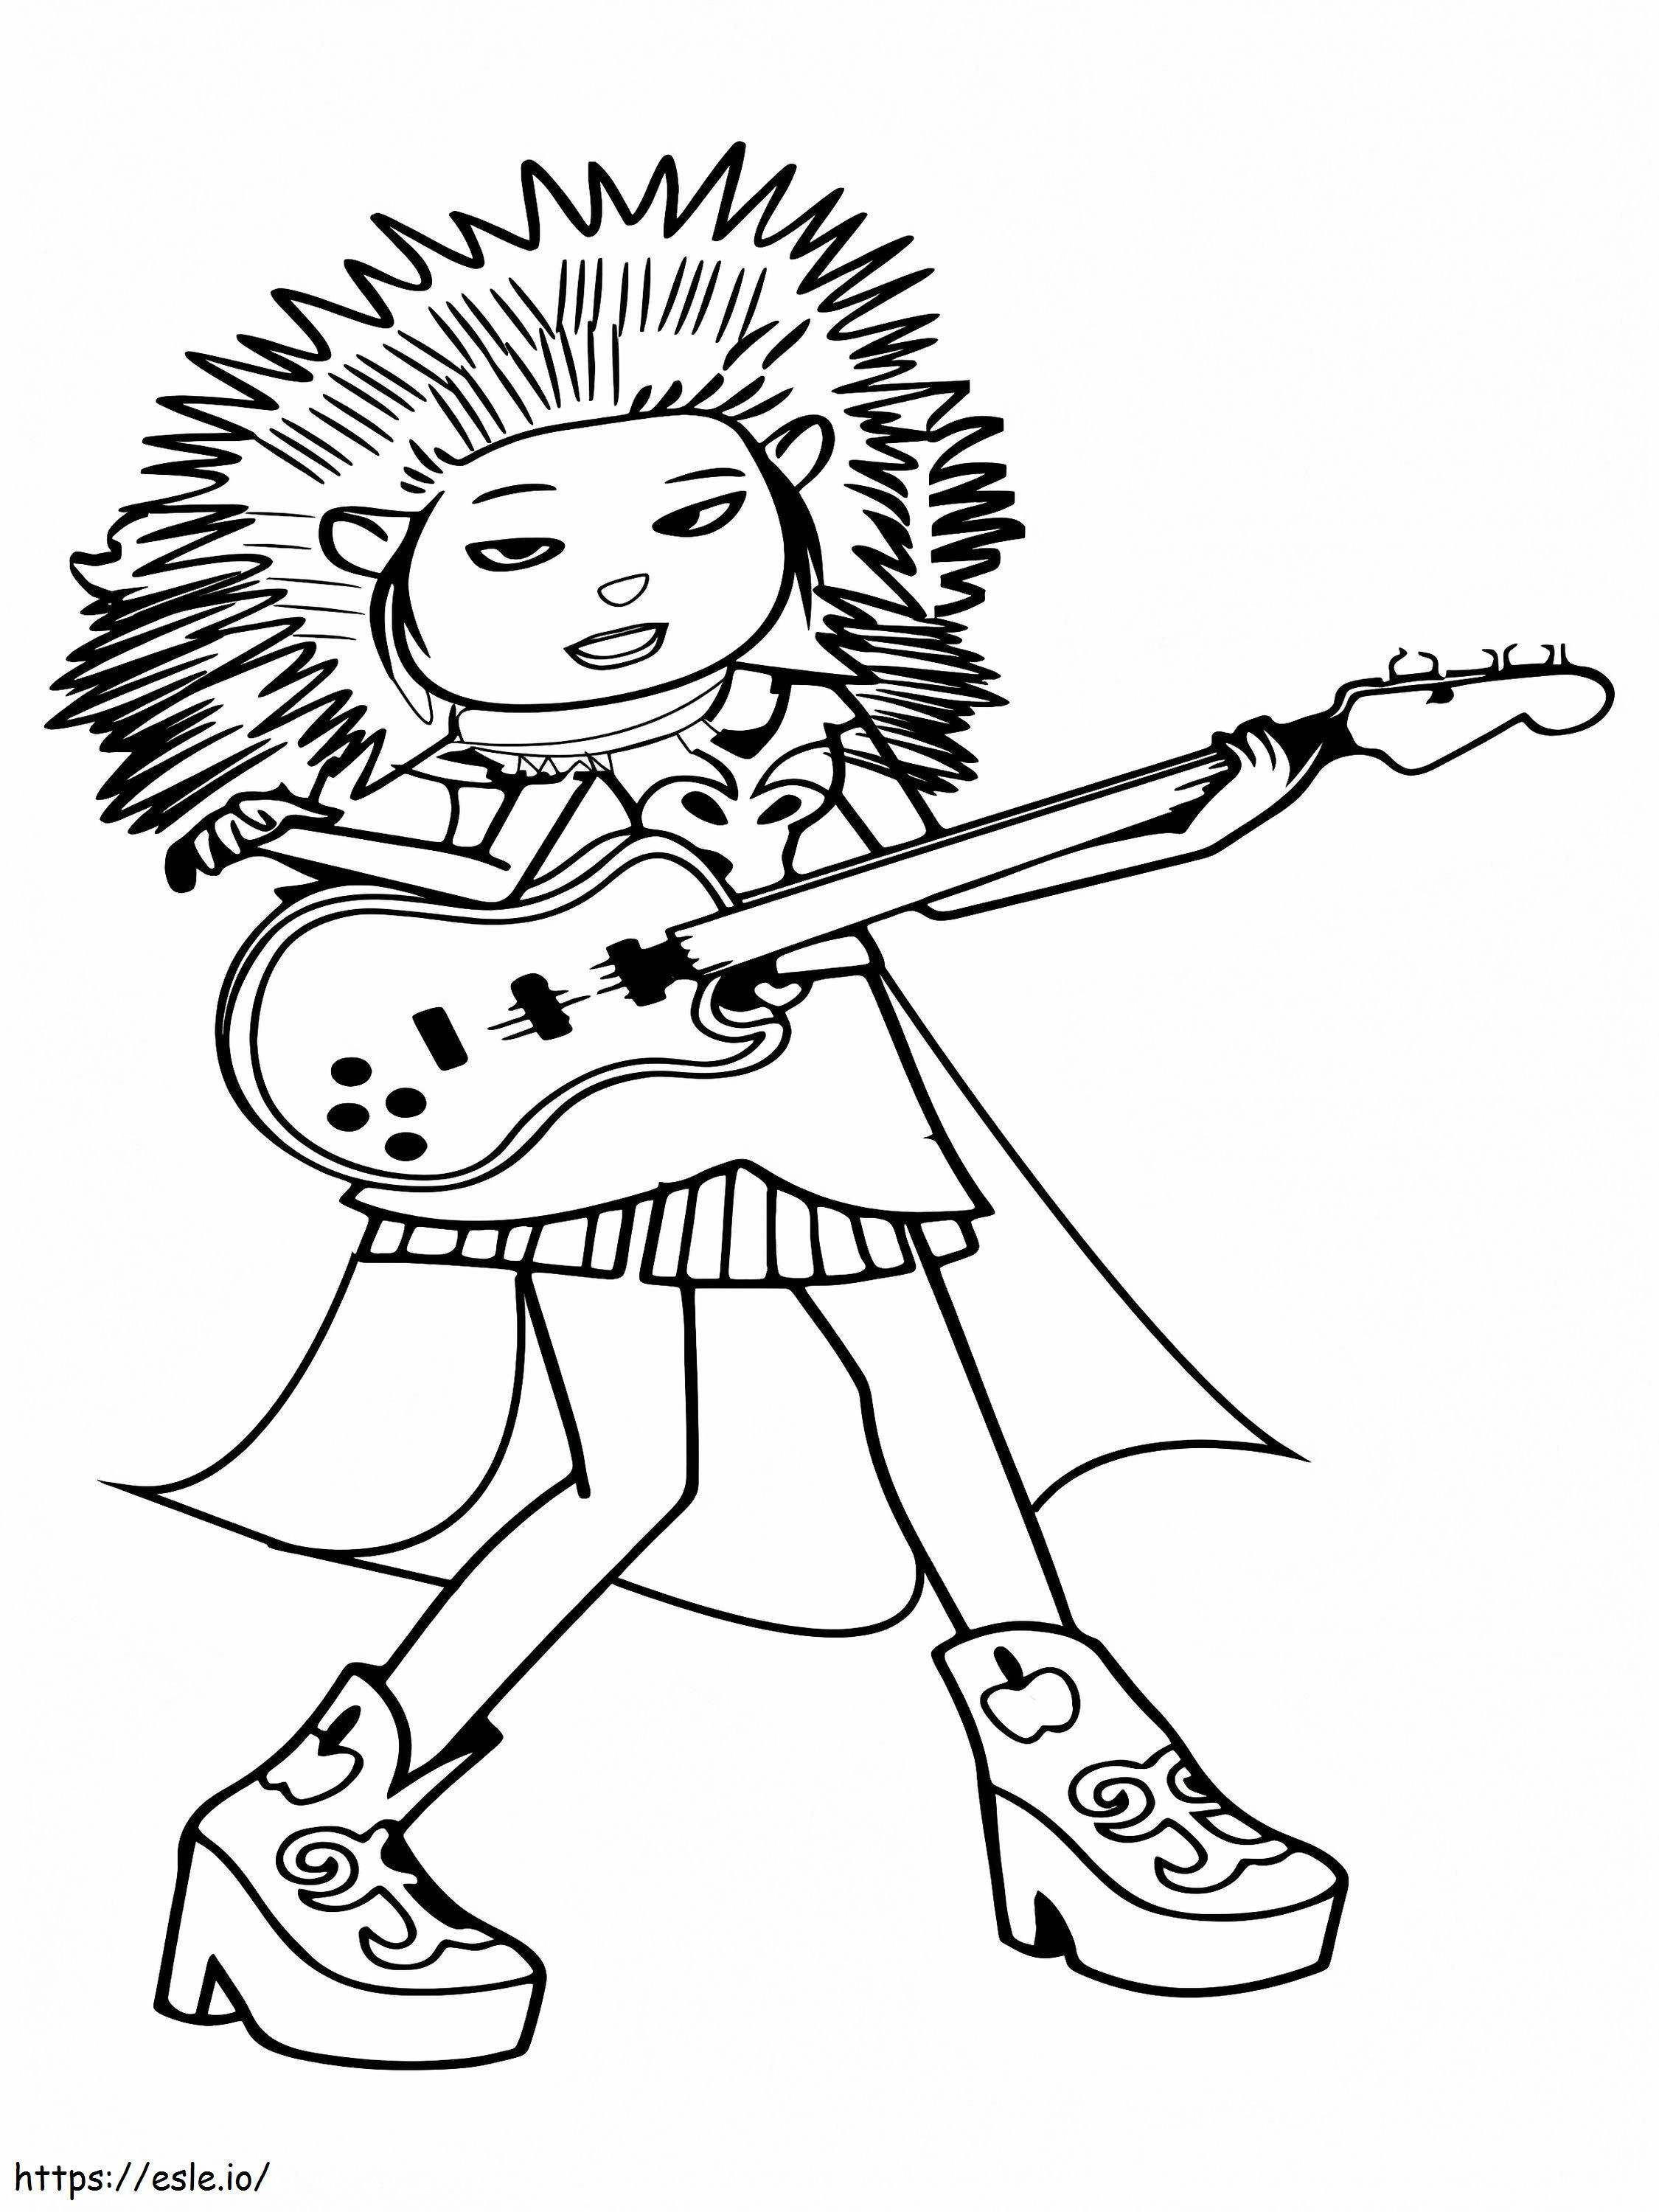 Coloriage Rockstar Ash avec guitare à imprimer dessin